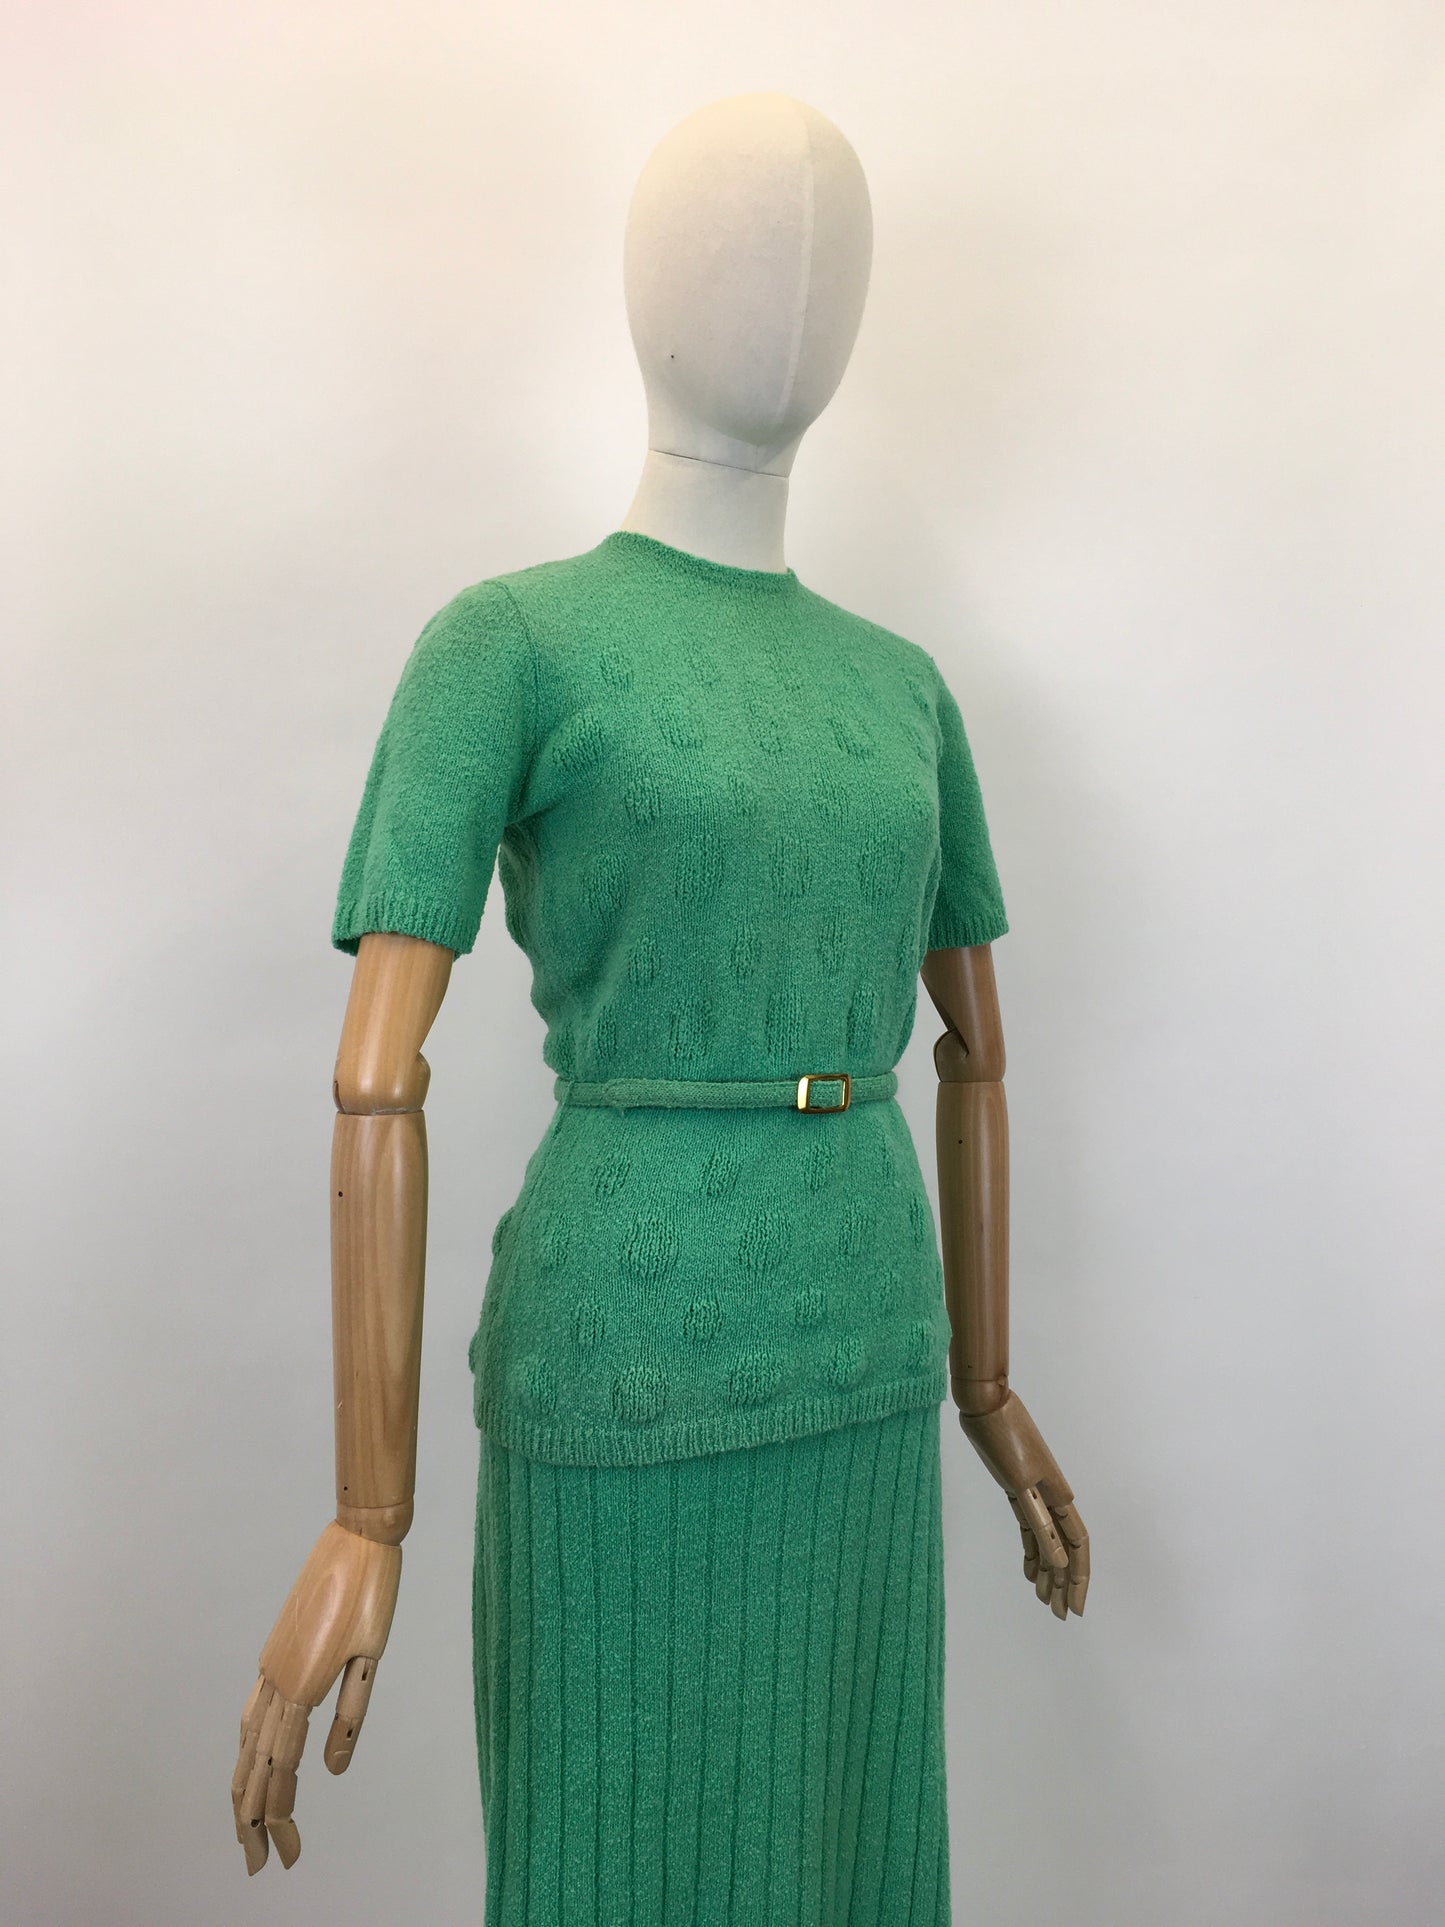 Original 1950's Darling 3 pc Knit Set by ' Roos Bros Sportswear' - In Mint Green